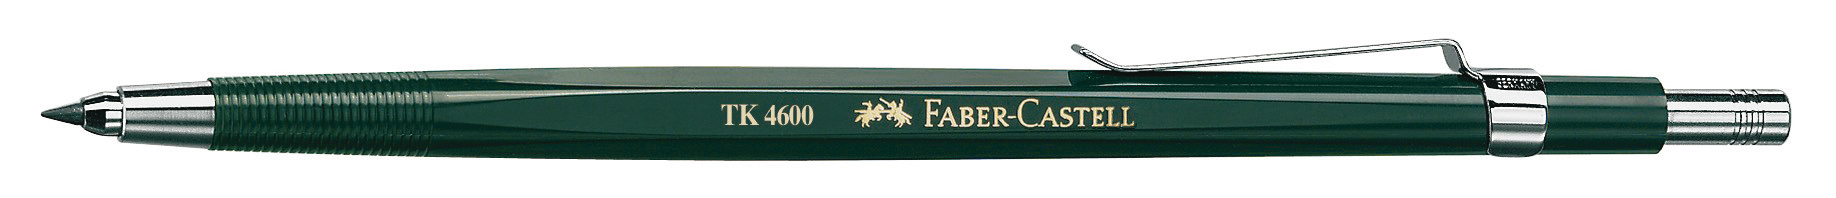 [2216242] Stiftpenna Faber TK 4600 2mm